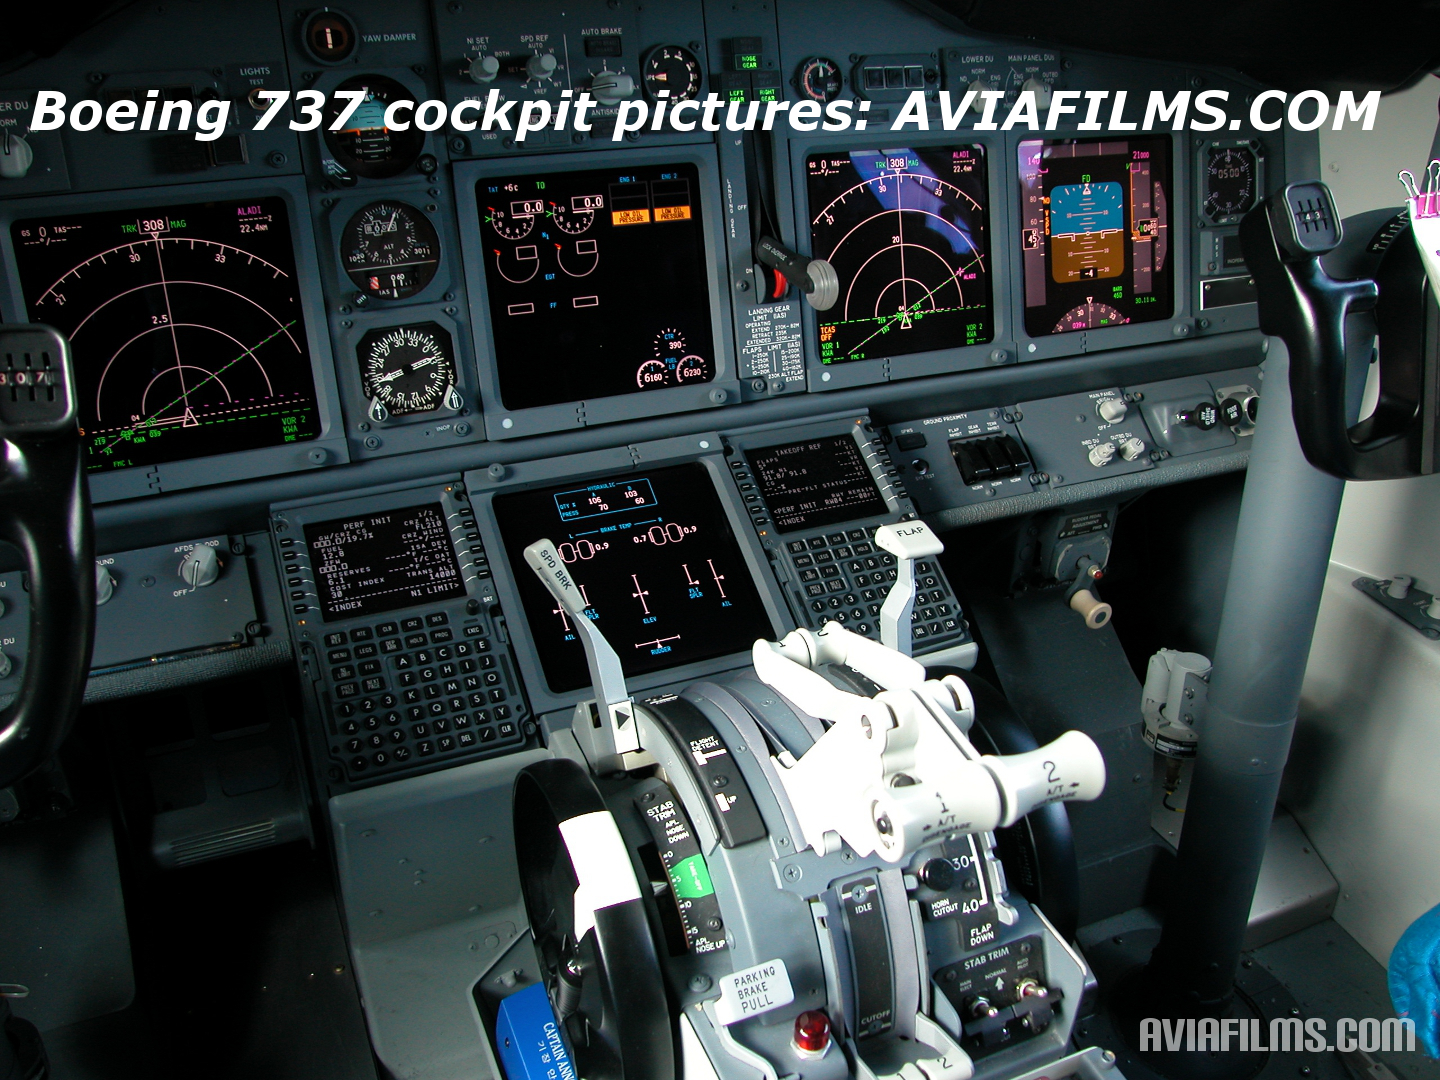 Aircraft Photos Cockpits External S Airliners